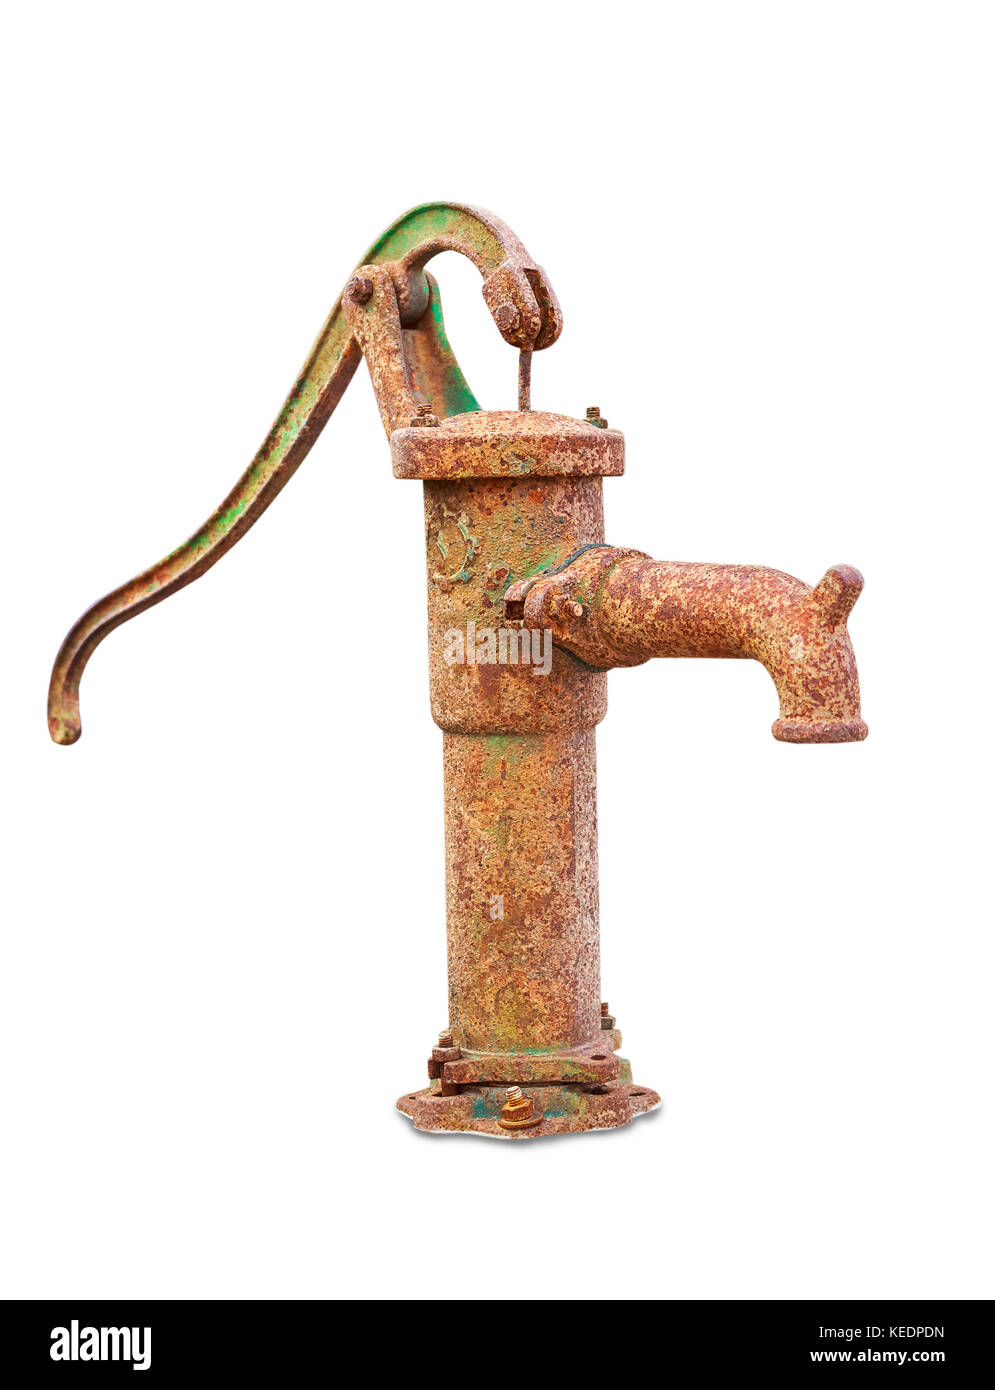 Rust in water pump фото 79